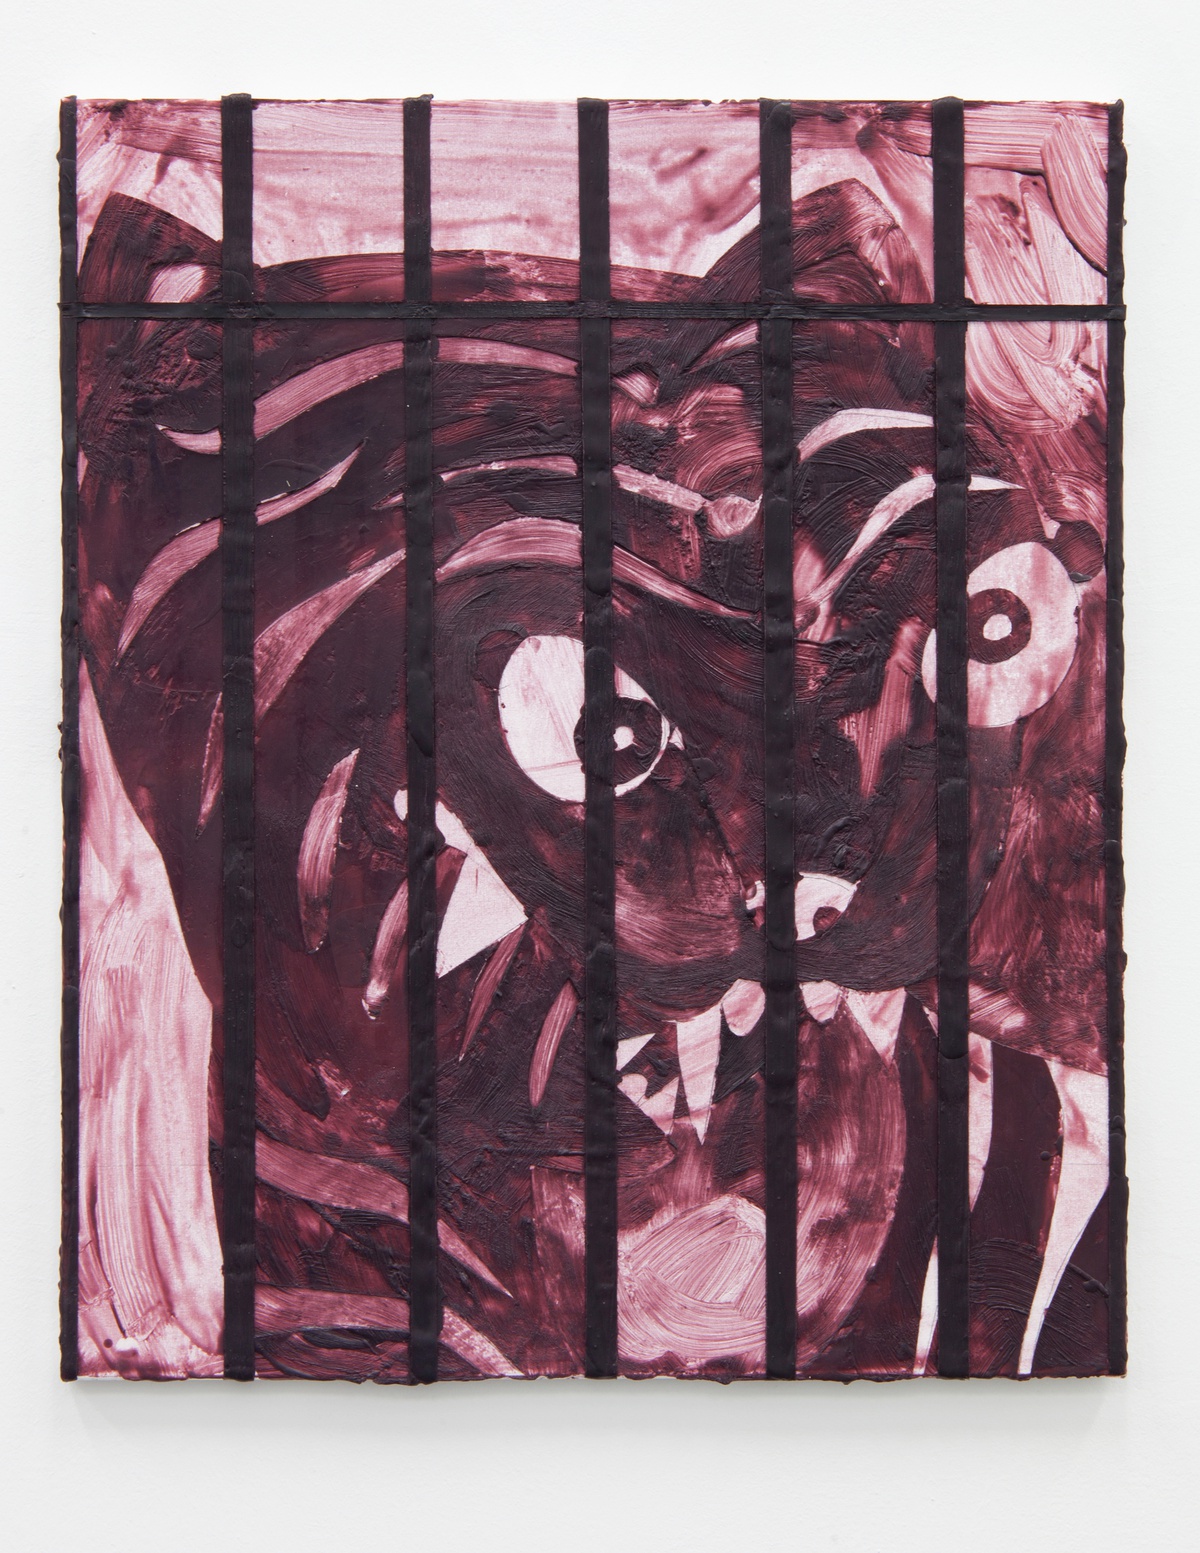 Nikolas Gambaroff, Untitled (Tigre Parisien), 2019encaustic on canvas50x60cm